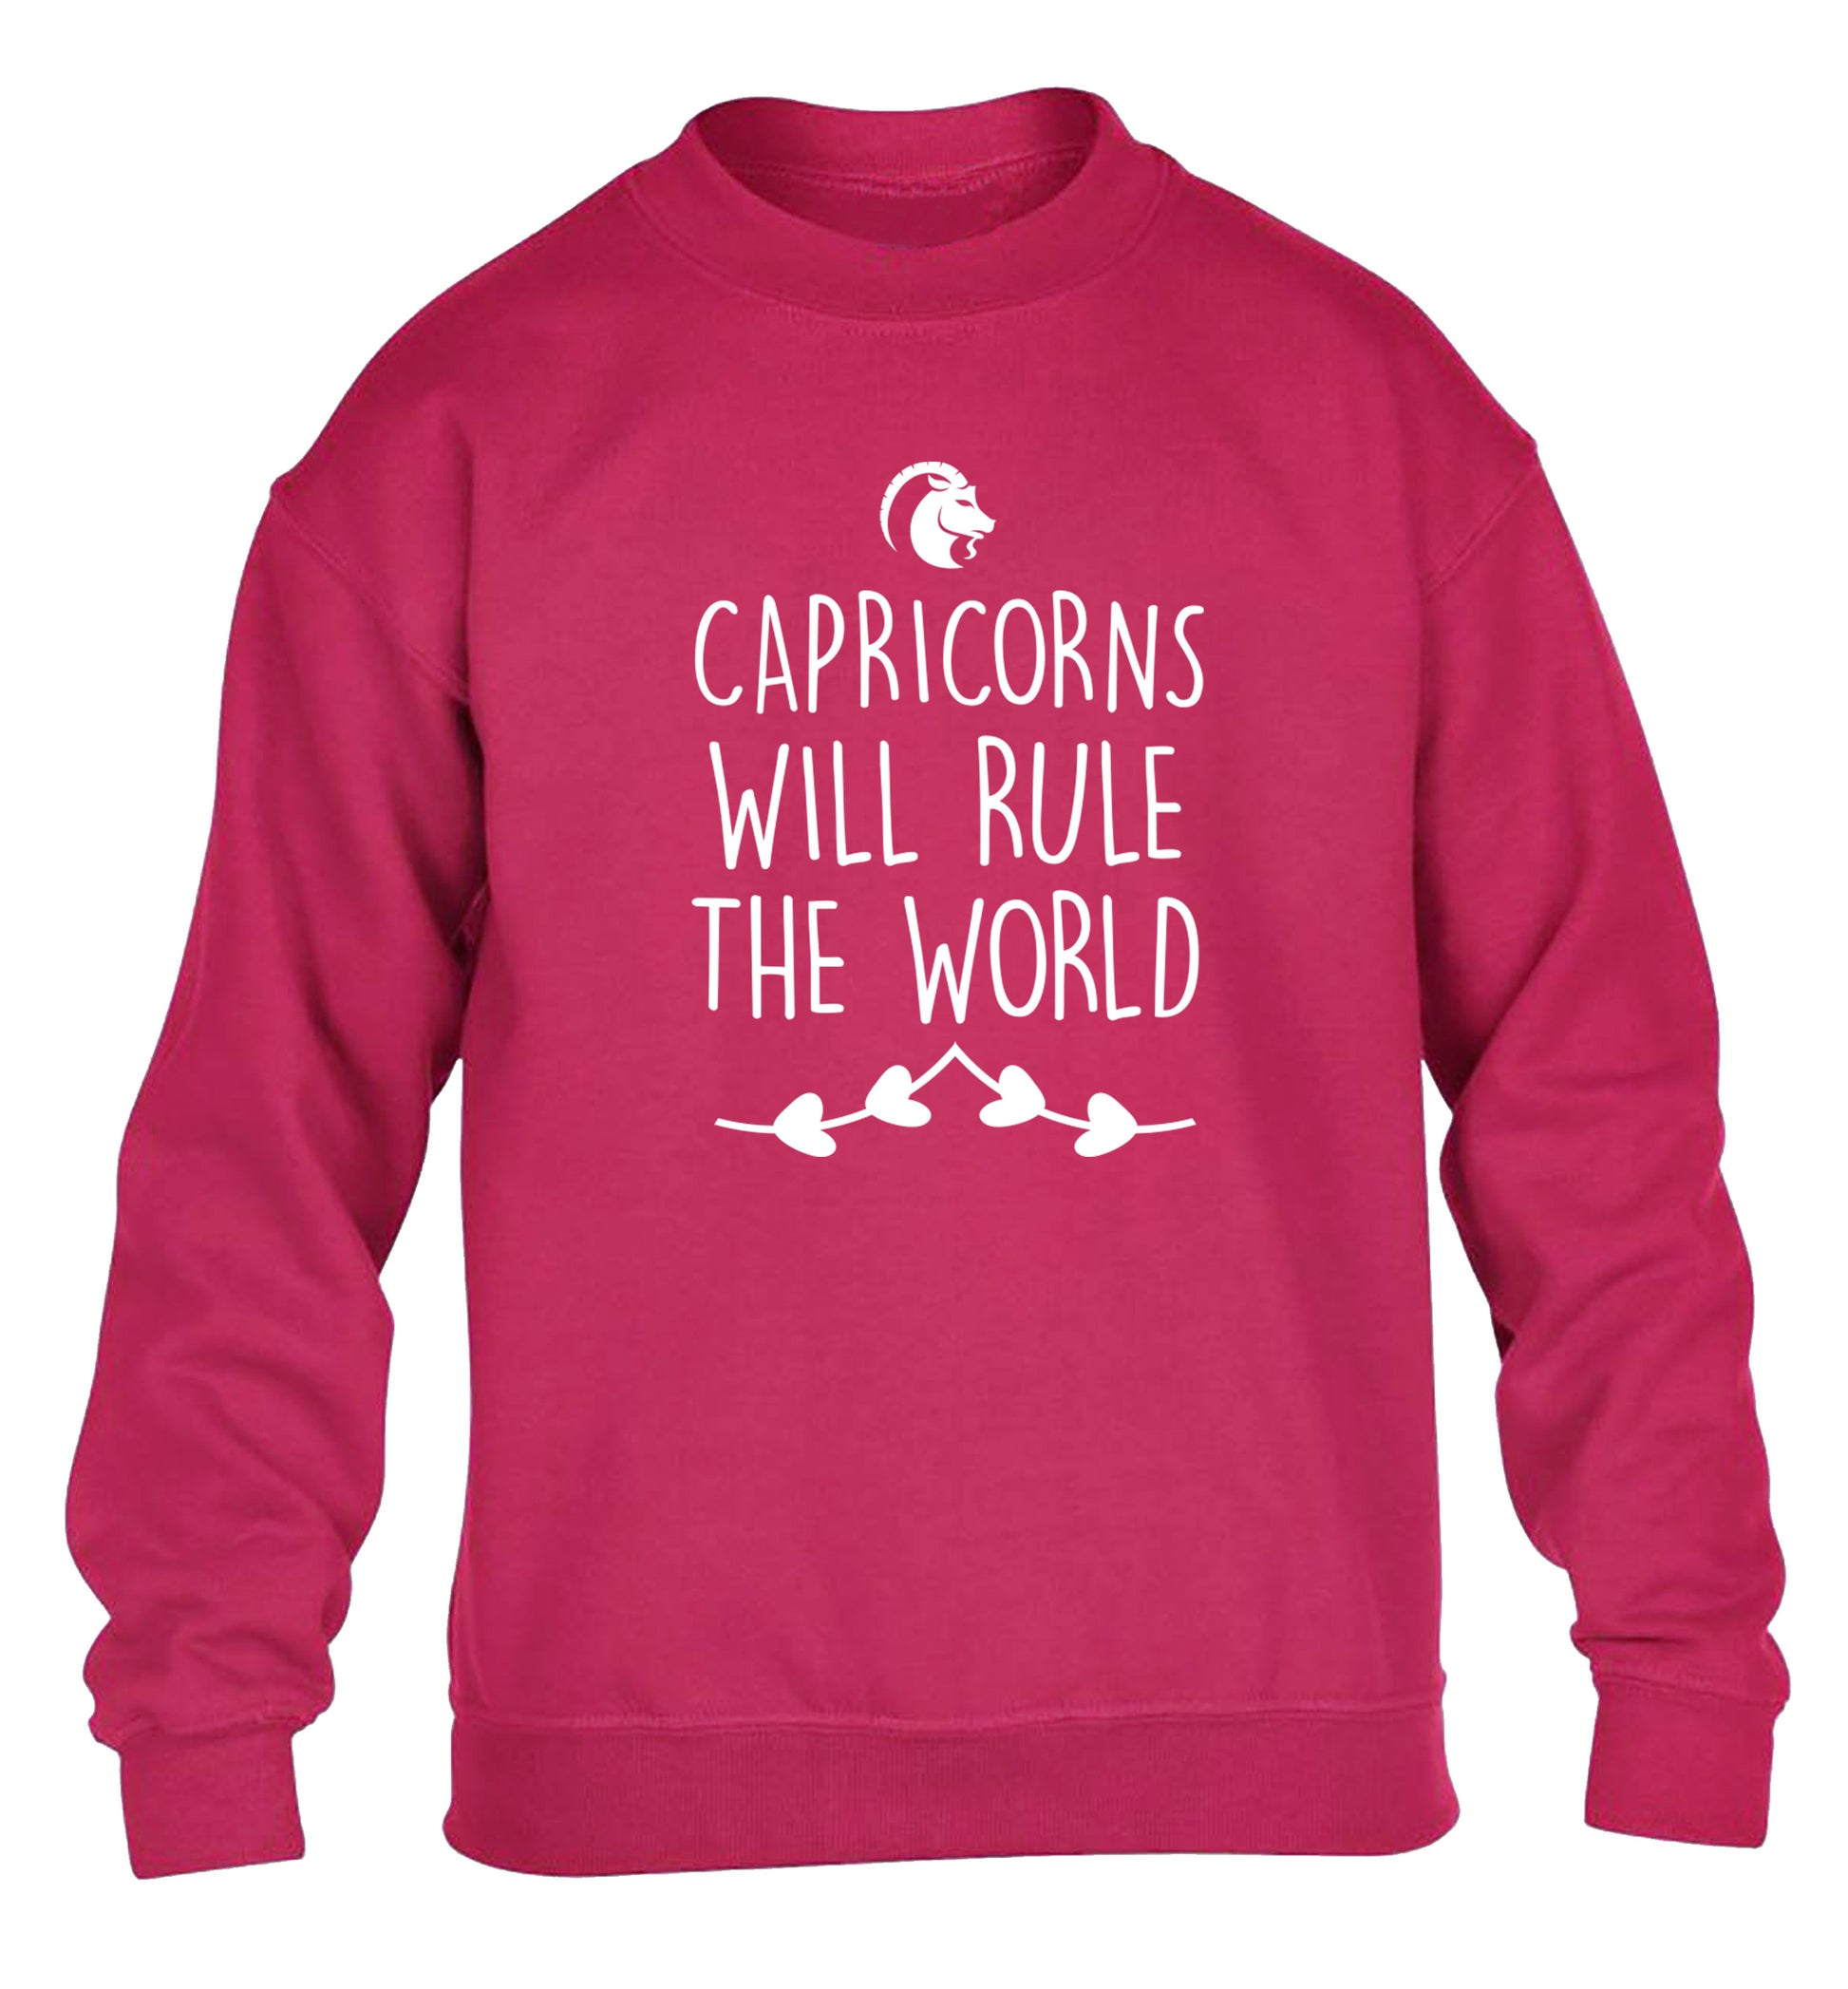 Capricorns will rule the world children's pink sweater 12-13 Years